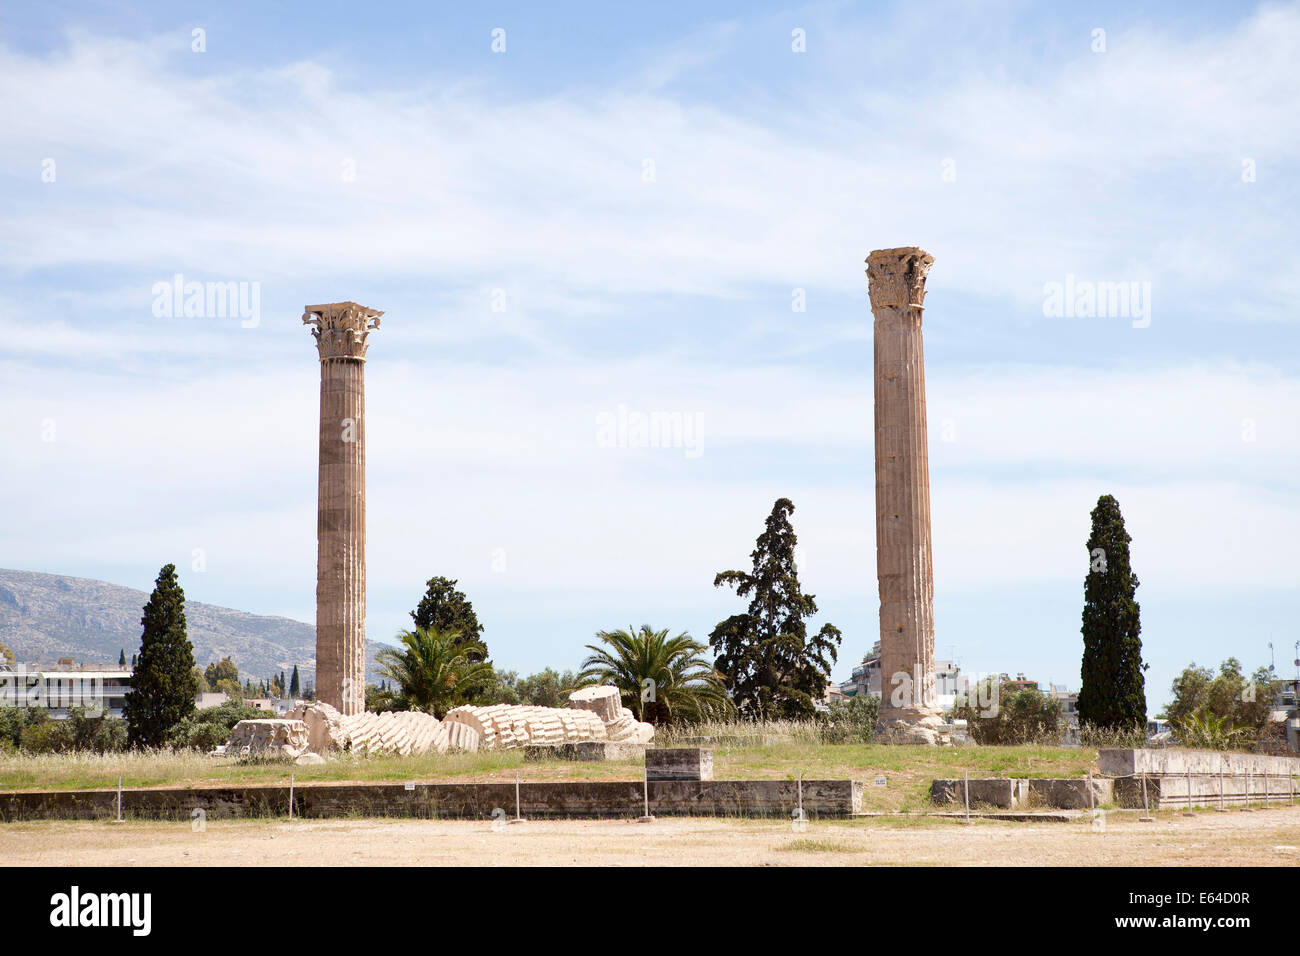 Temple of Olympian Zeus, Athens Stock Photo